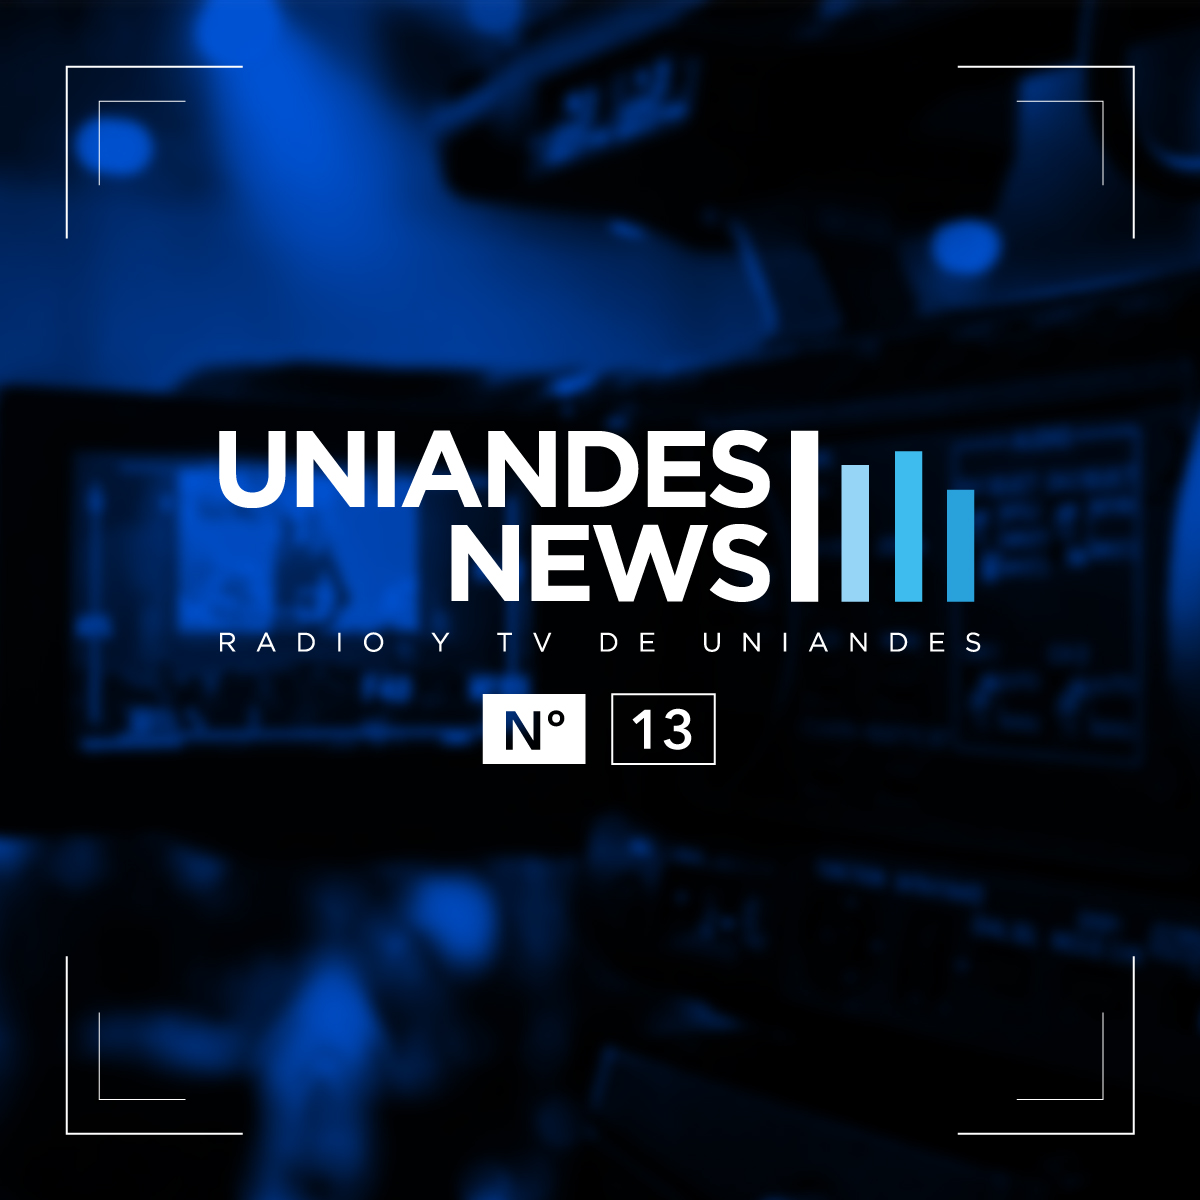 Uniandes News 13